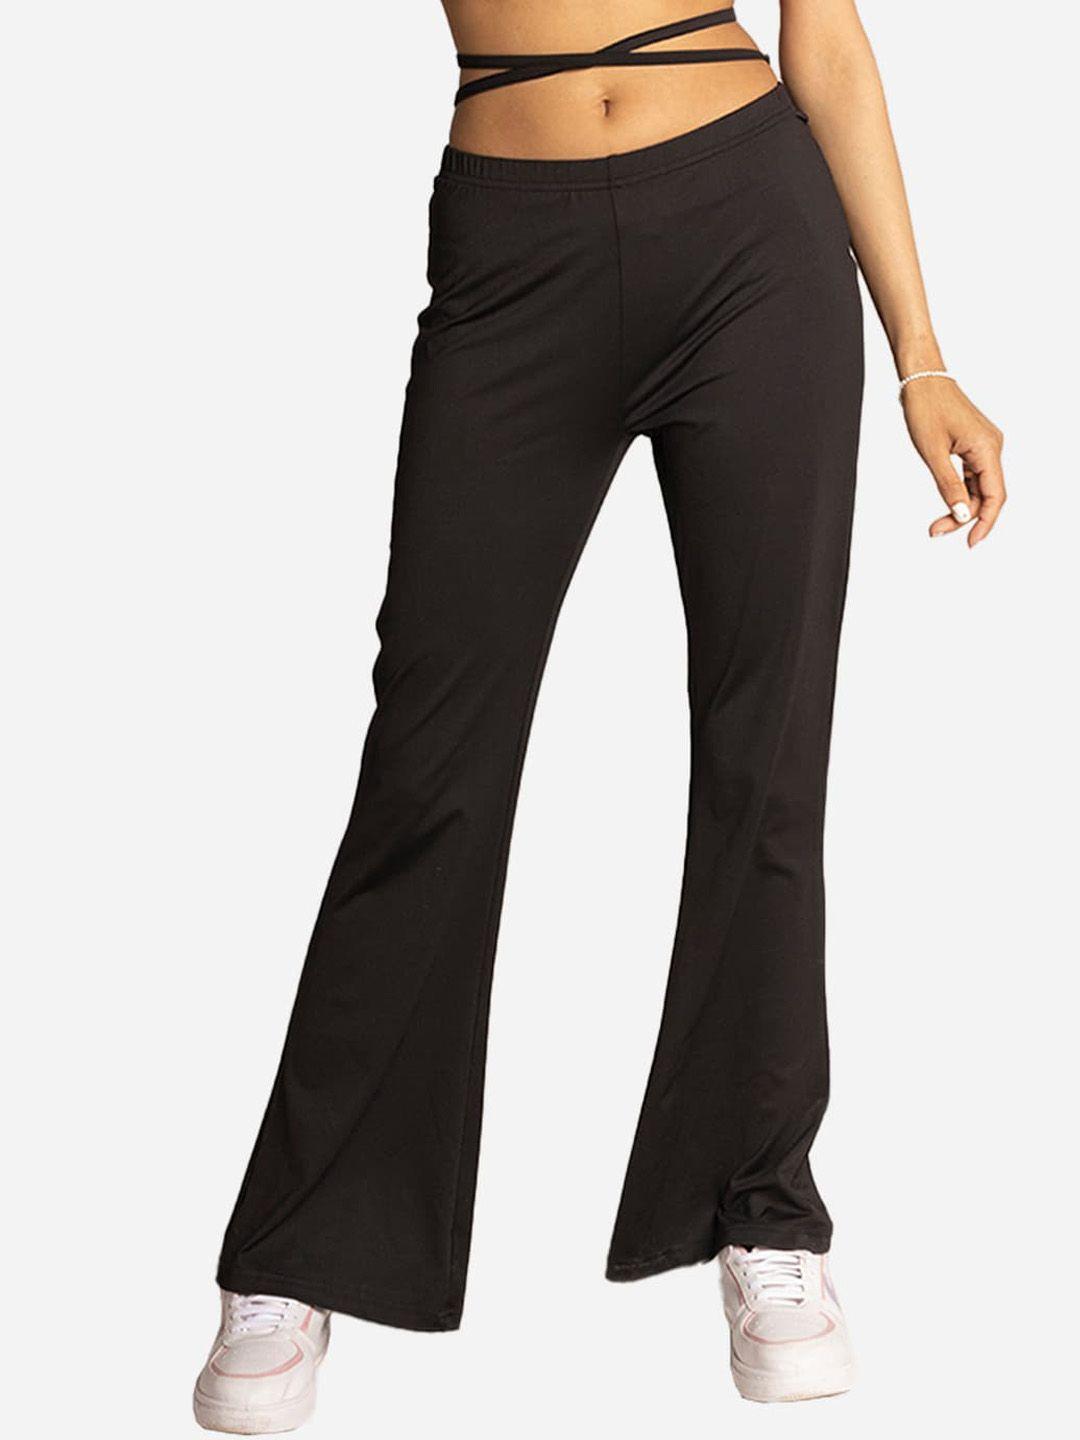 edrio women black solid midriff flossing bootcut track pants